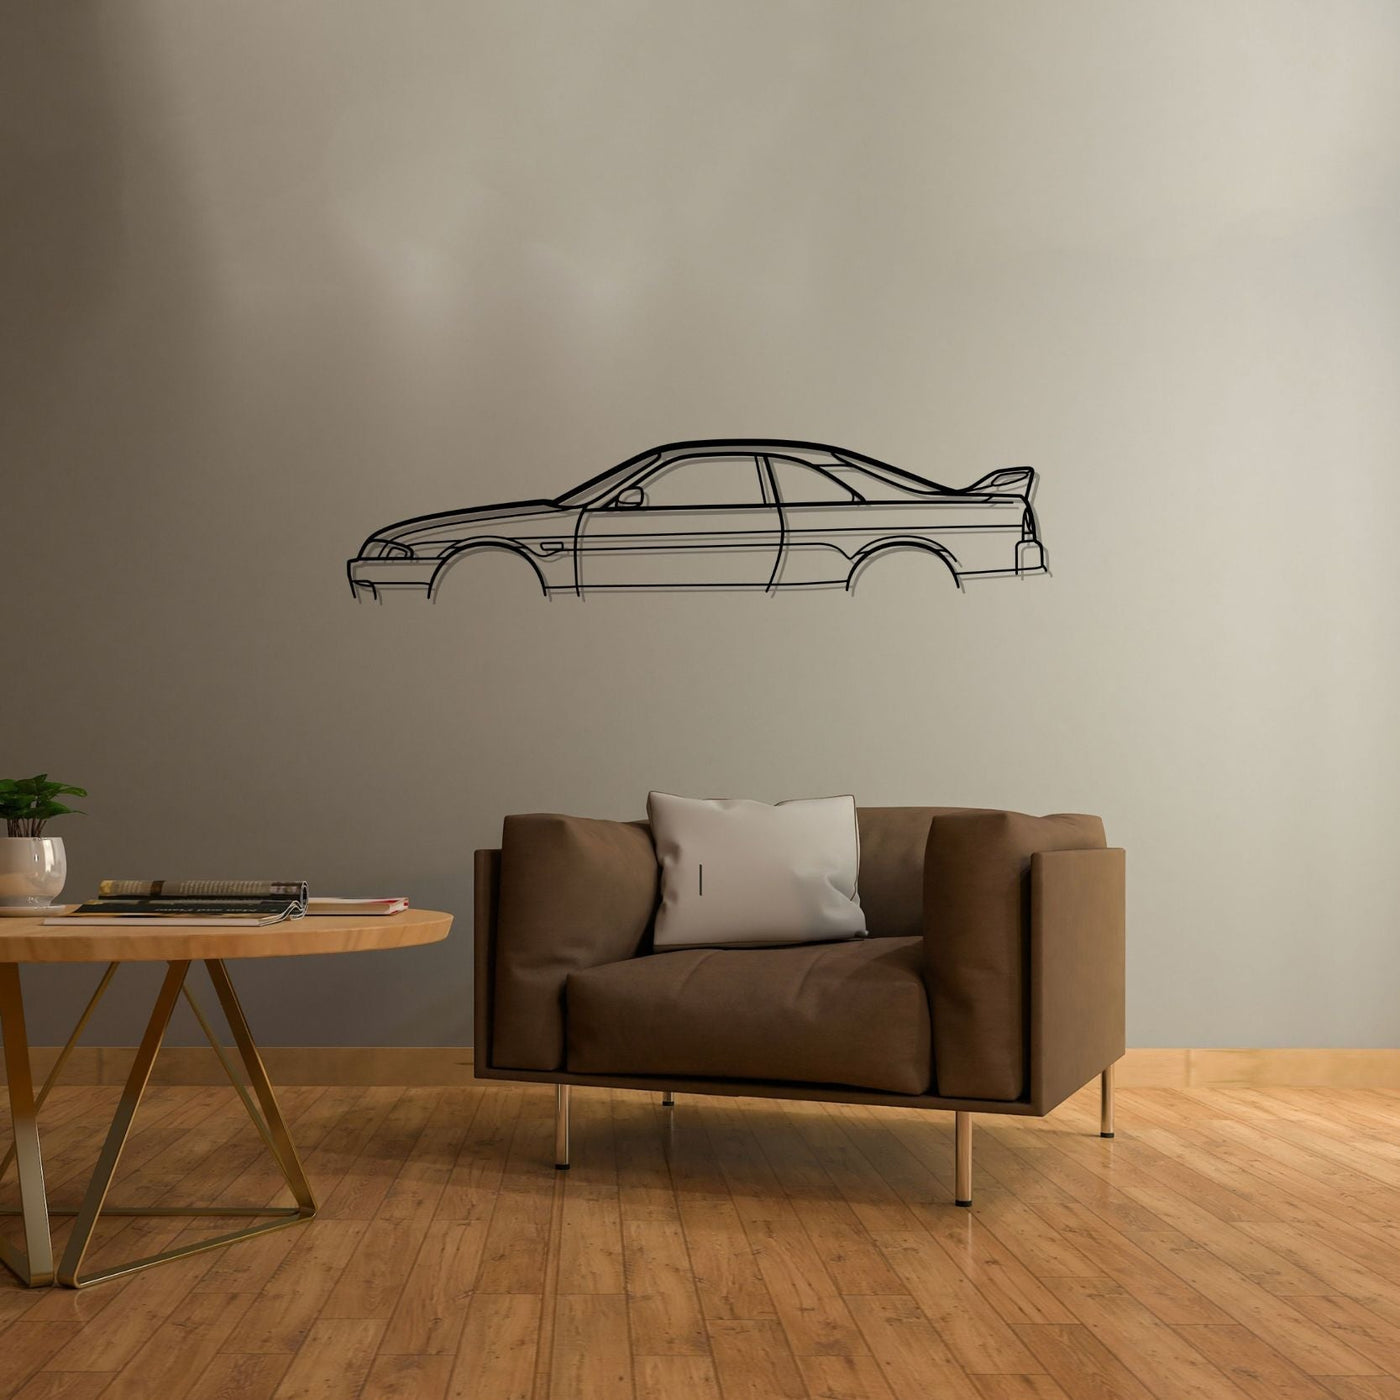 R33 GTR 1995 Classic Silhouette Metal Wall Art